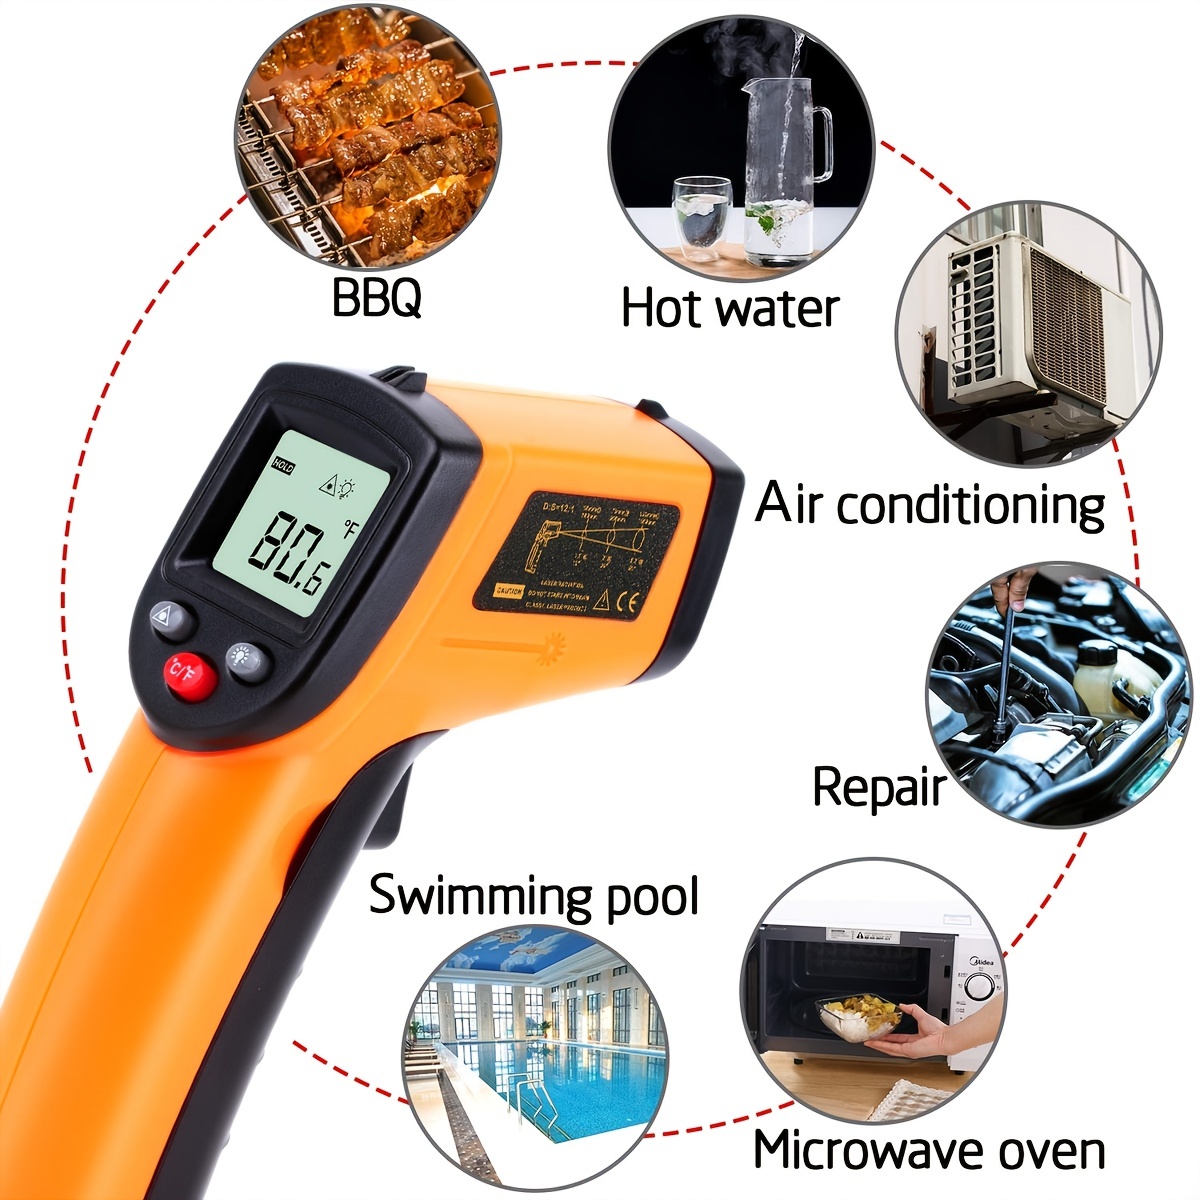 IR Laser Thermometer Infrared Temp Gun Non-Contact for Oil Deep